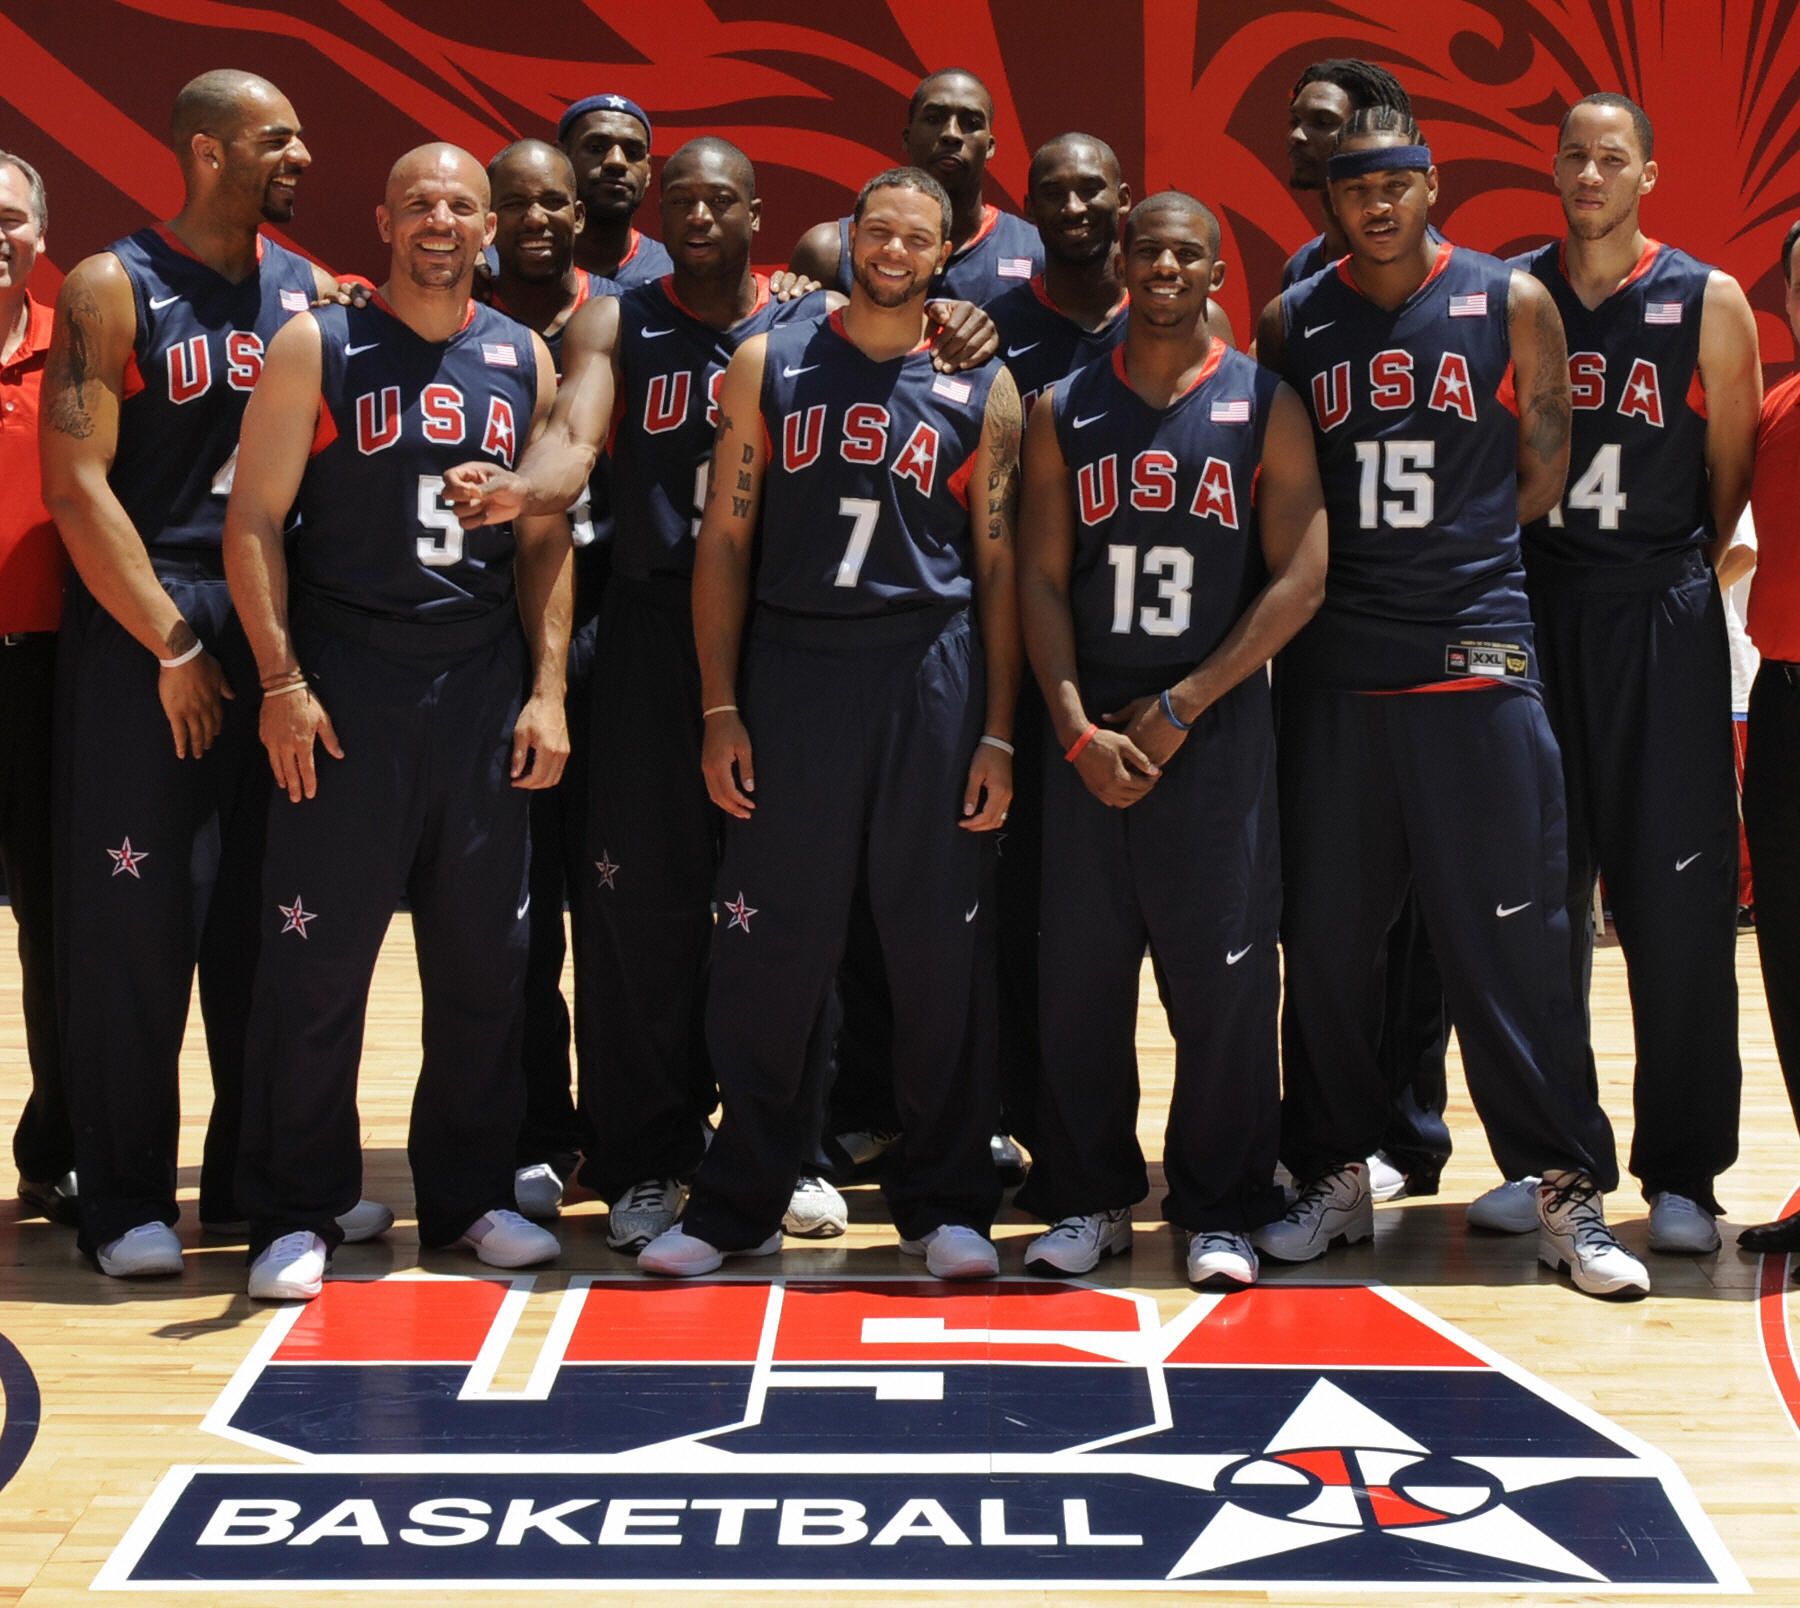 2008 USA Olympic Basketball Team Practice Worn Jerseys Lot of 12,, Lot  #20034